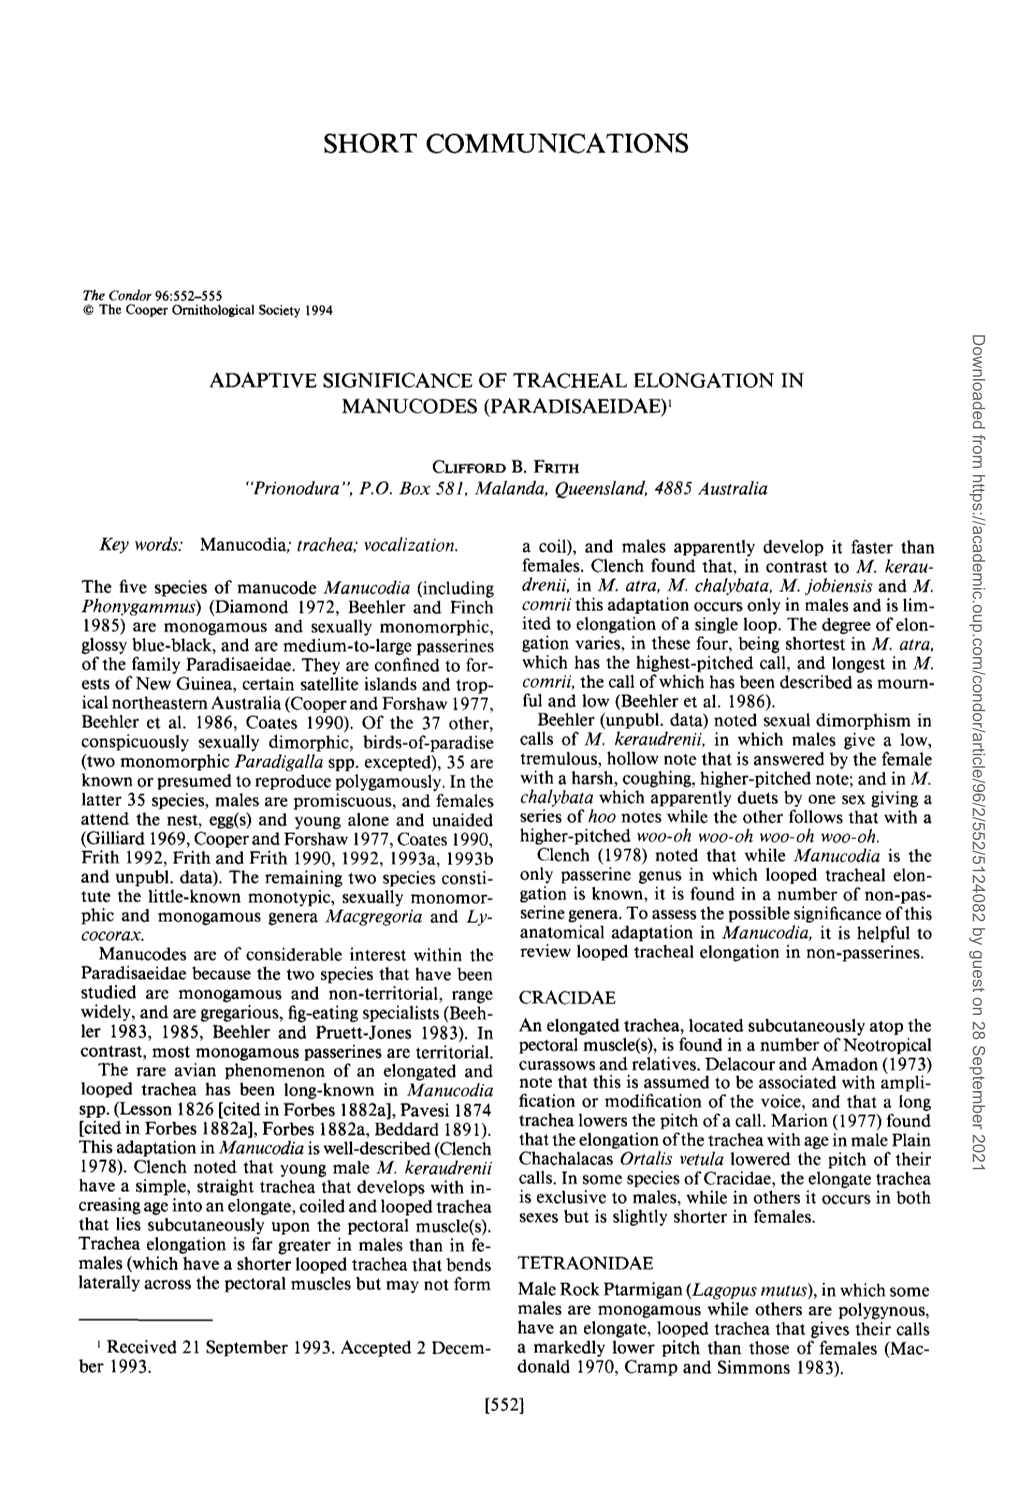 Adaptive Significance of Tracheal Elongation in Manucodes (Paradisaeidae) ’